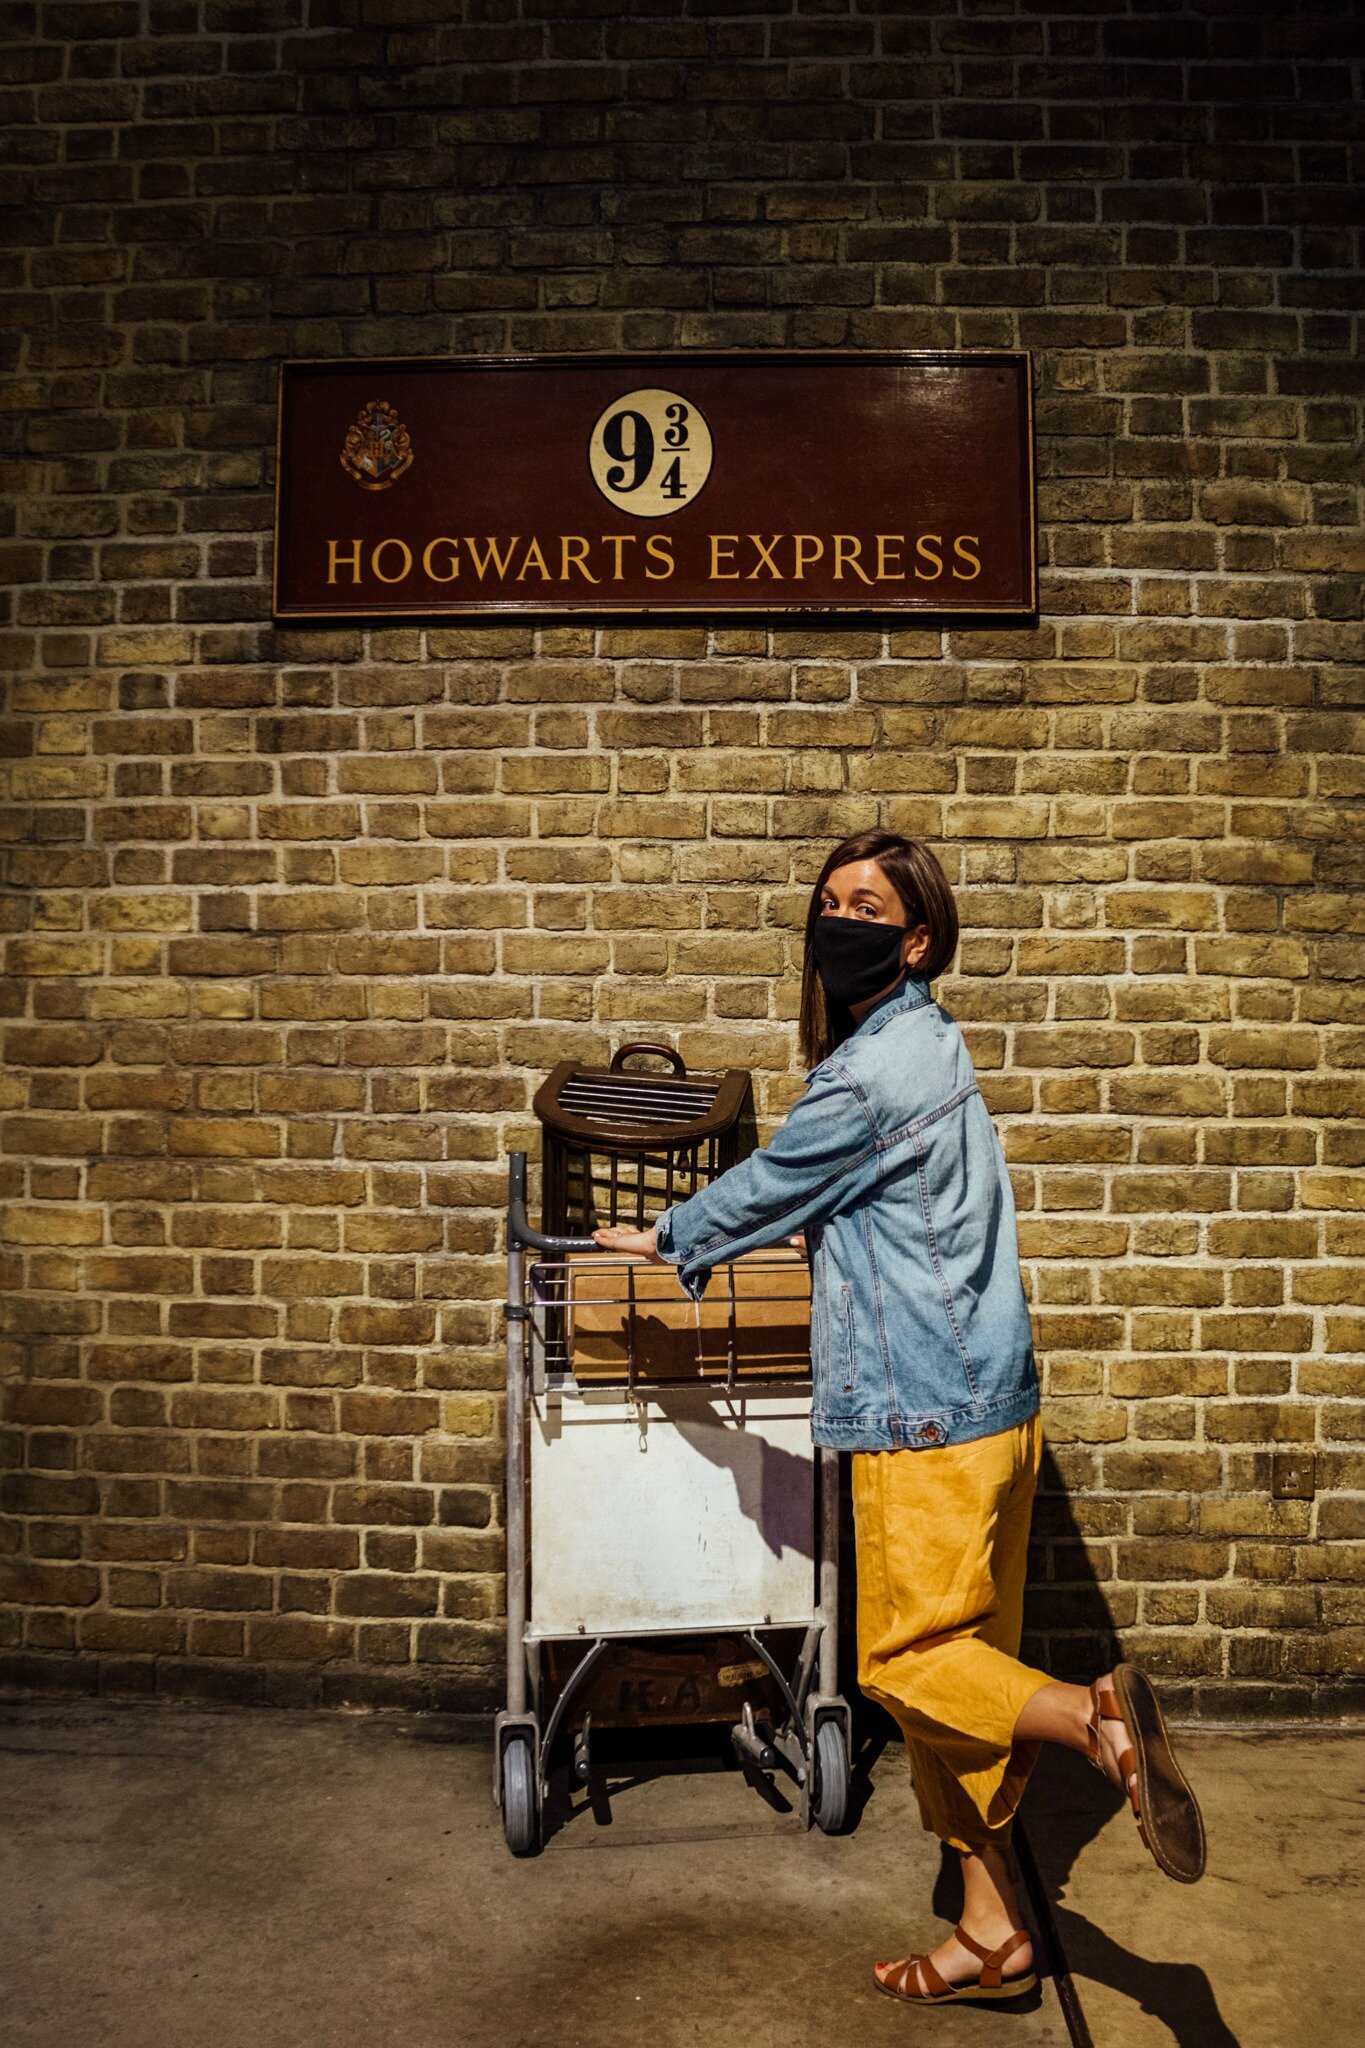 Platform 9 3/4, Harry Potter Studio